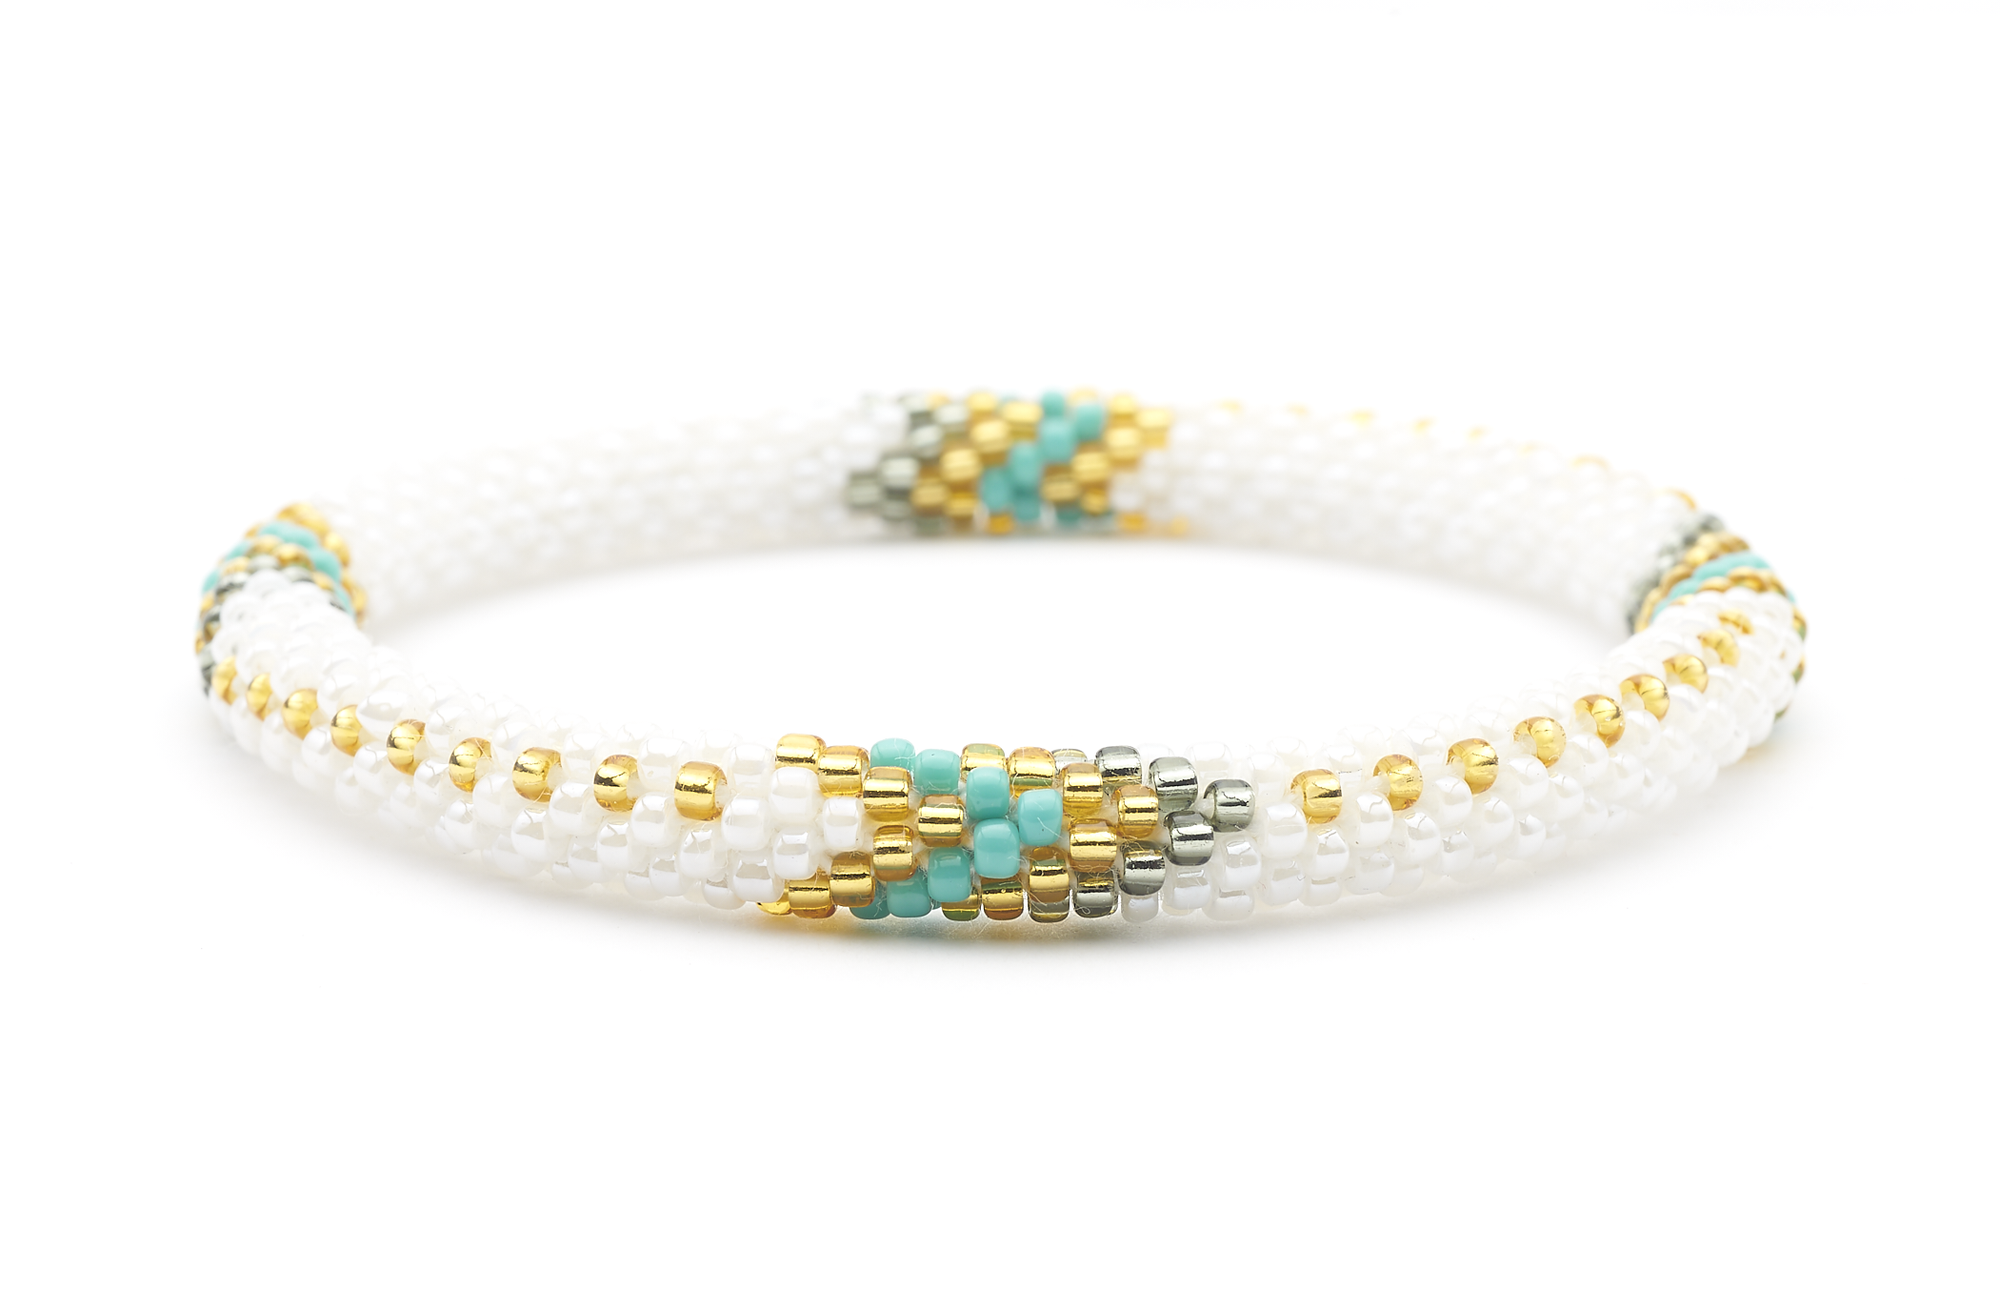 Sashka Co. Extended 8" Bracelet White / Turquoise / Silver / Gold Limited Edition Boho Bracelet - Extended 8"